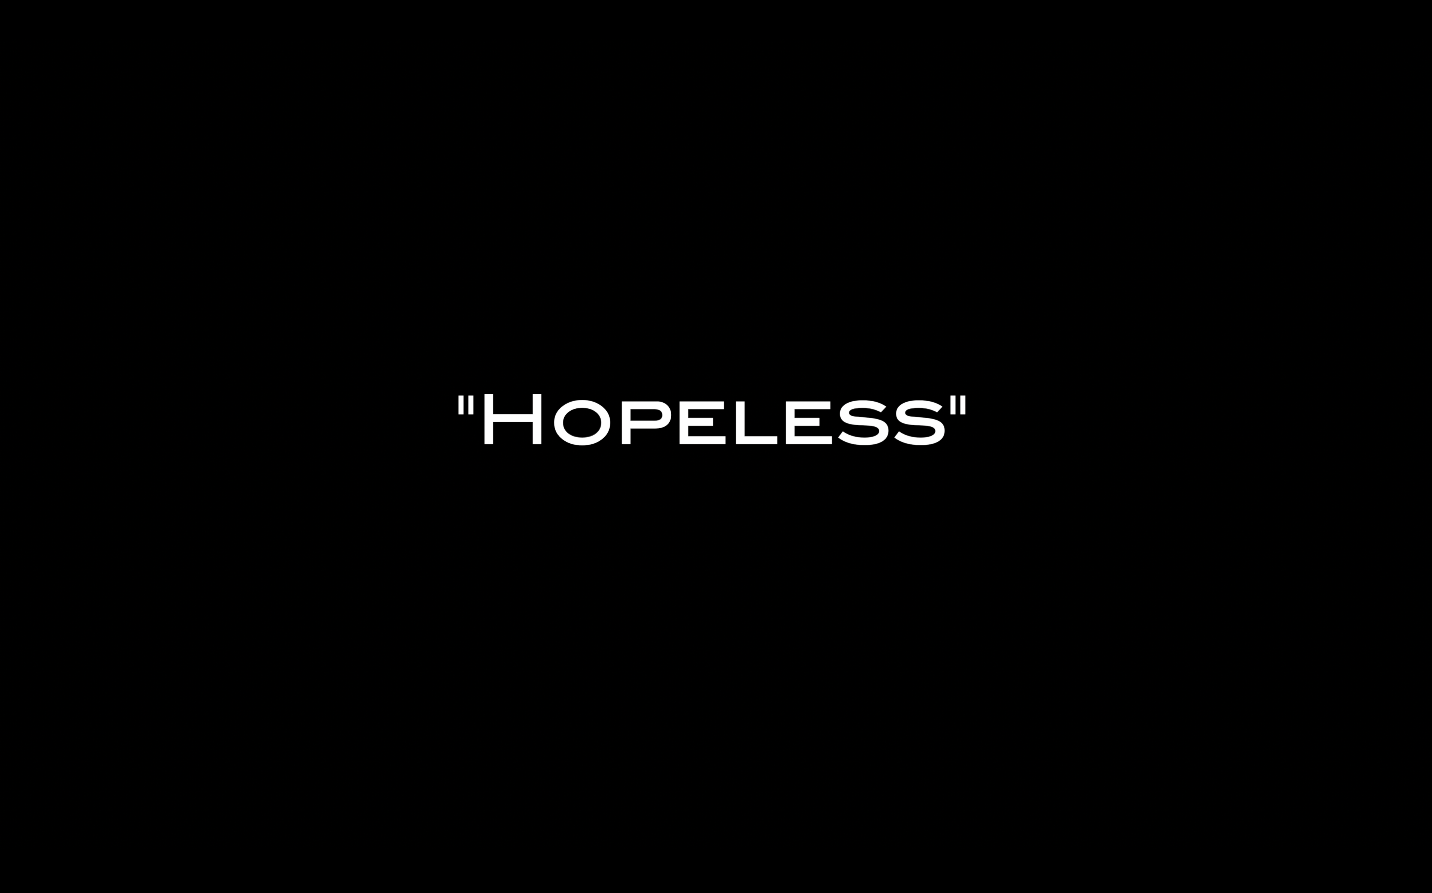 "HOPELESS" BY ERIN HANSON